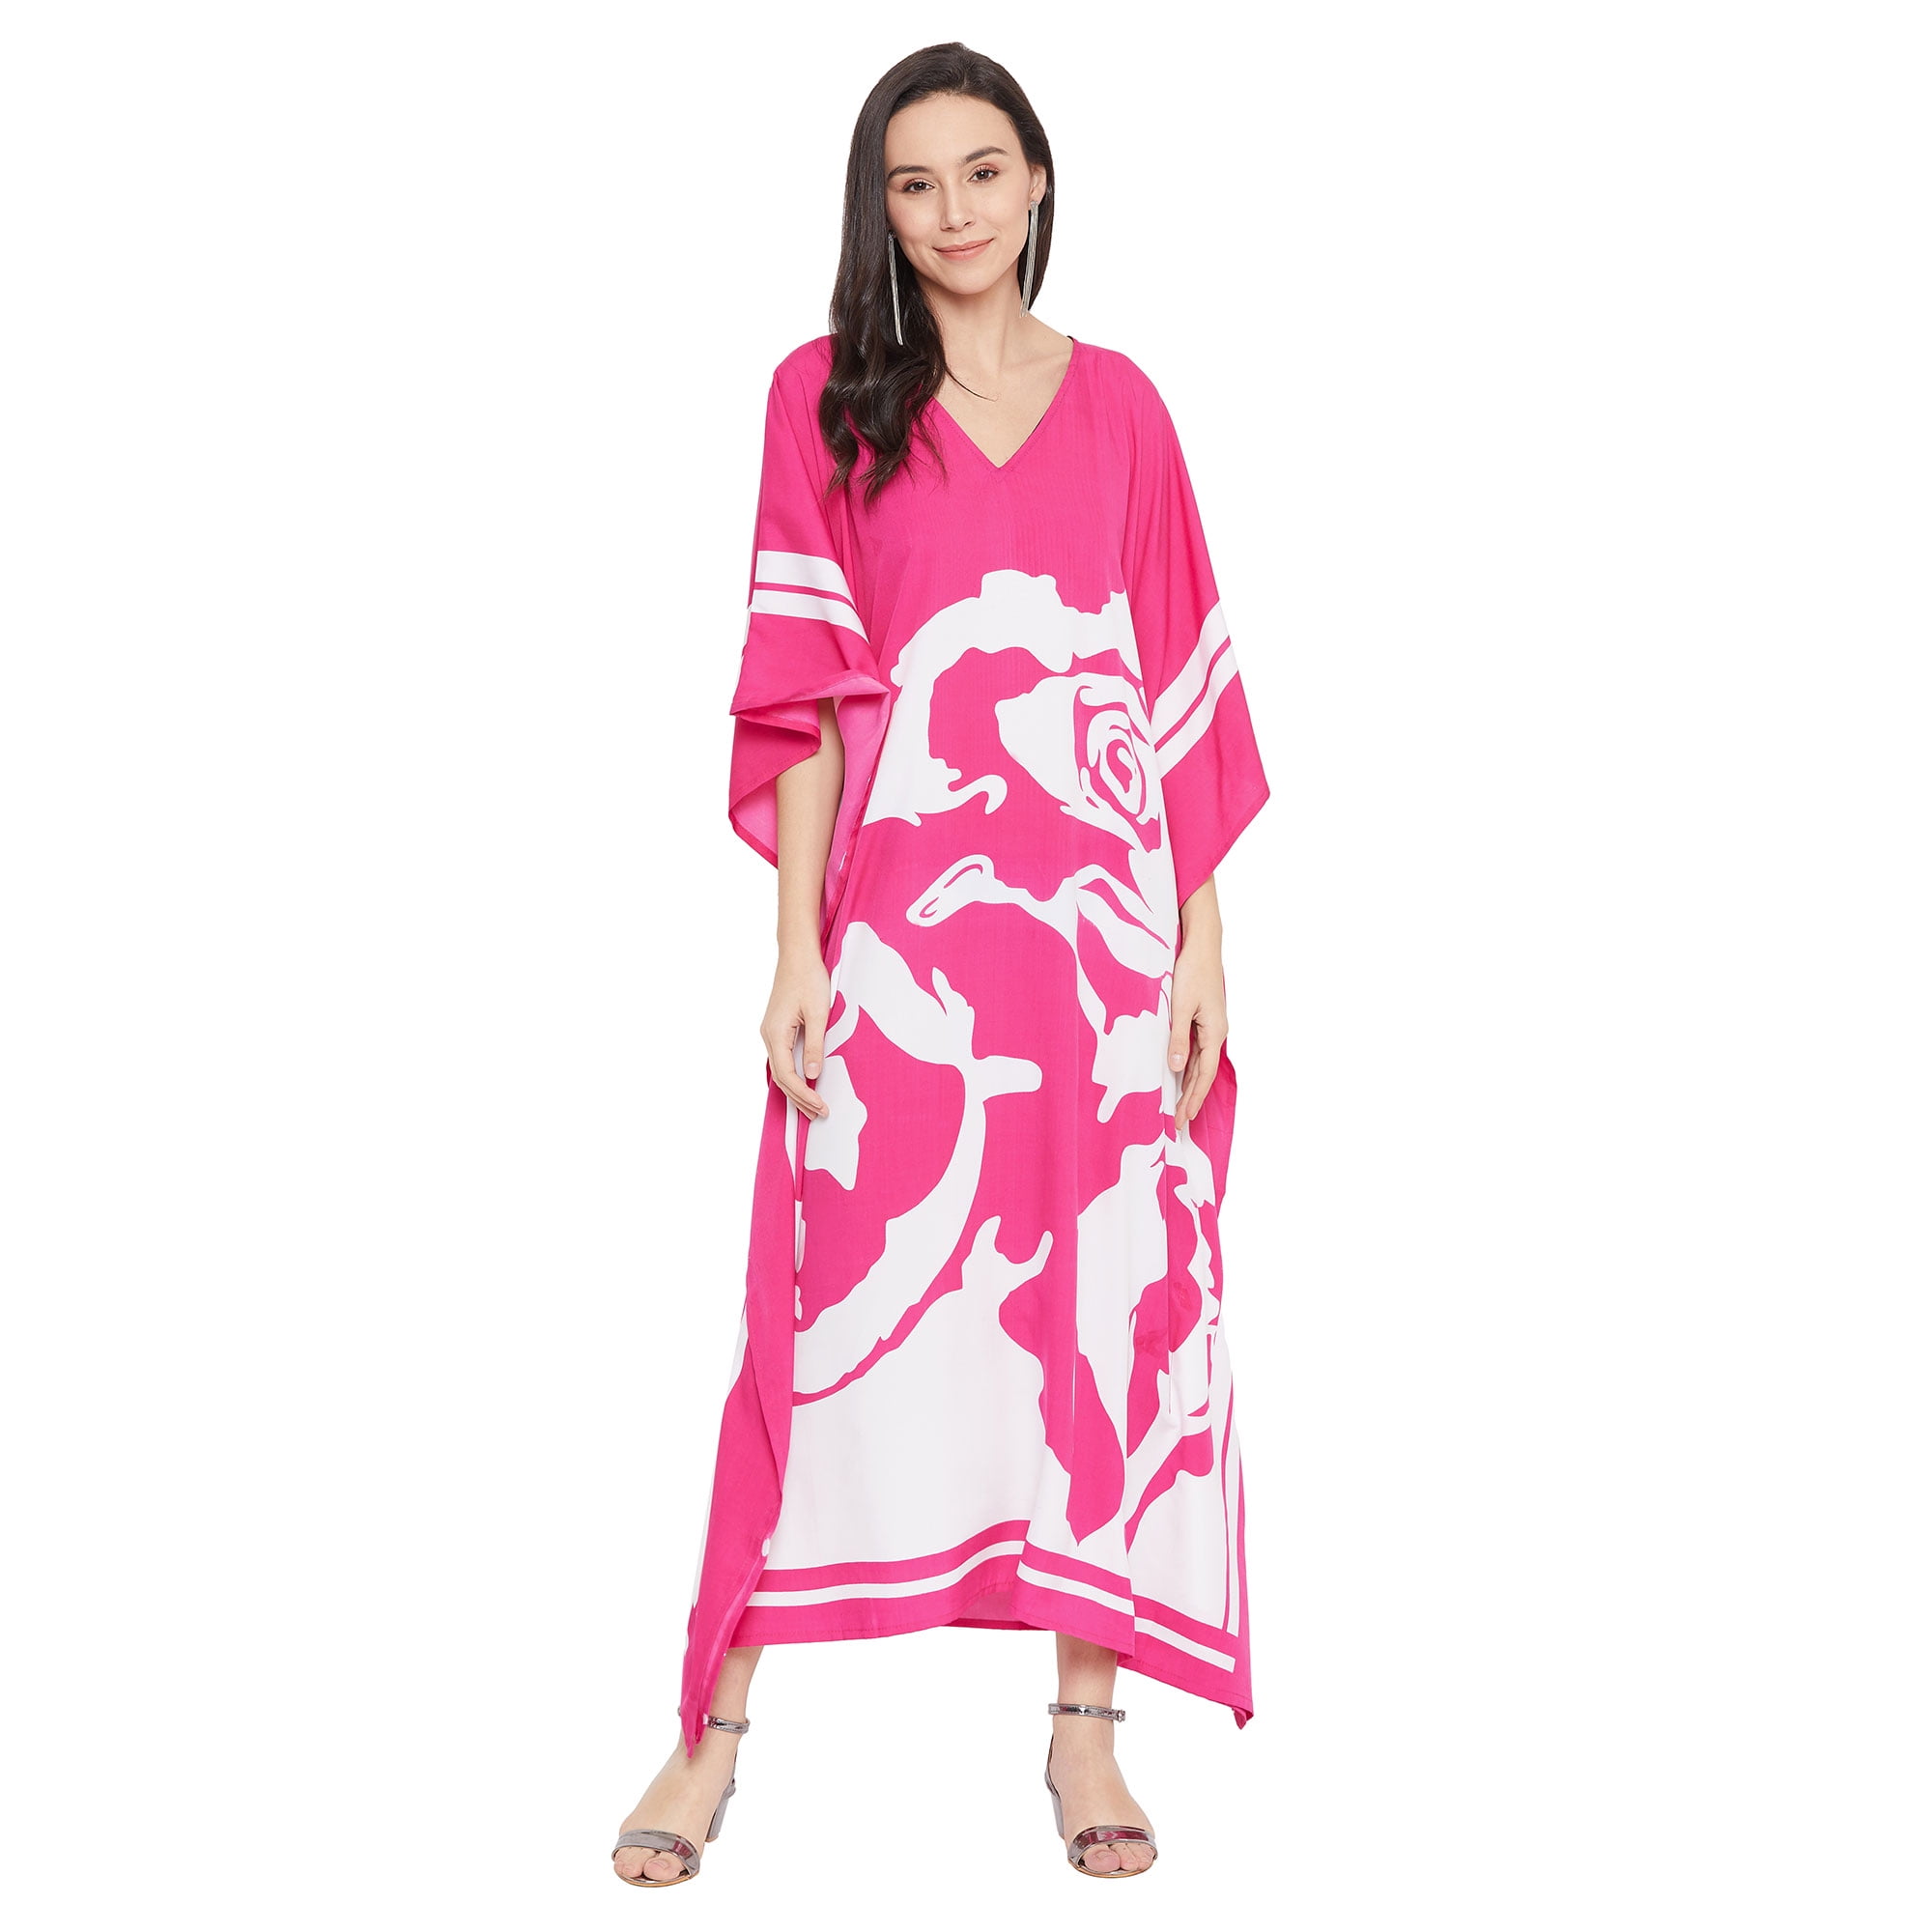 Gypsie Blu Plus Size Polyester Women’s Kaftans Kimono Sleeve Long Maxi Dress Evening Casual Beach Dresses for Ladies 